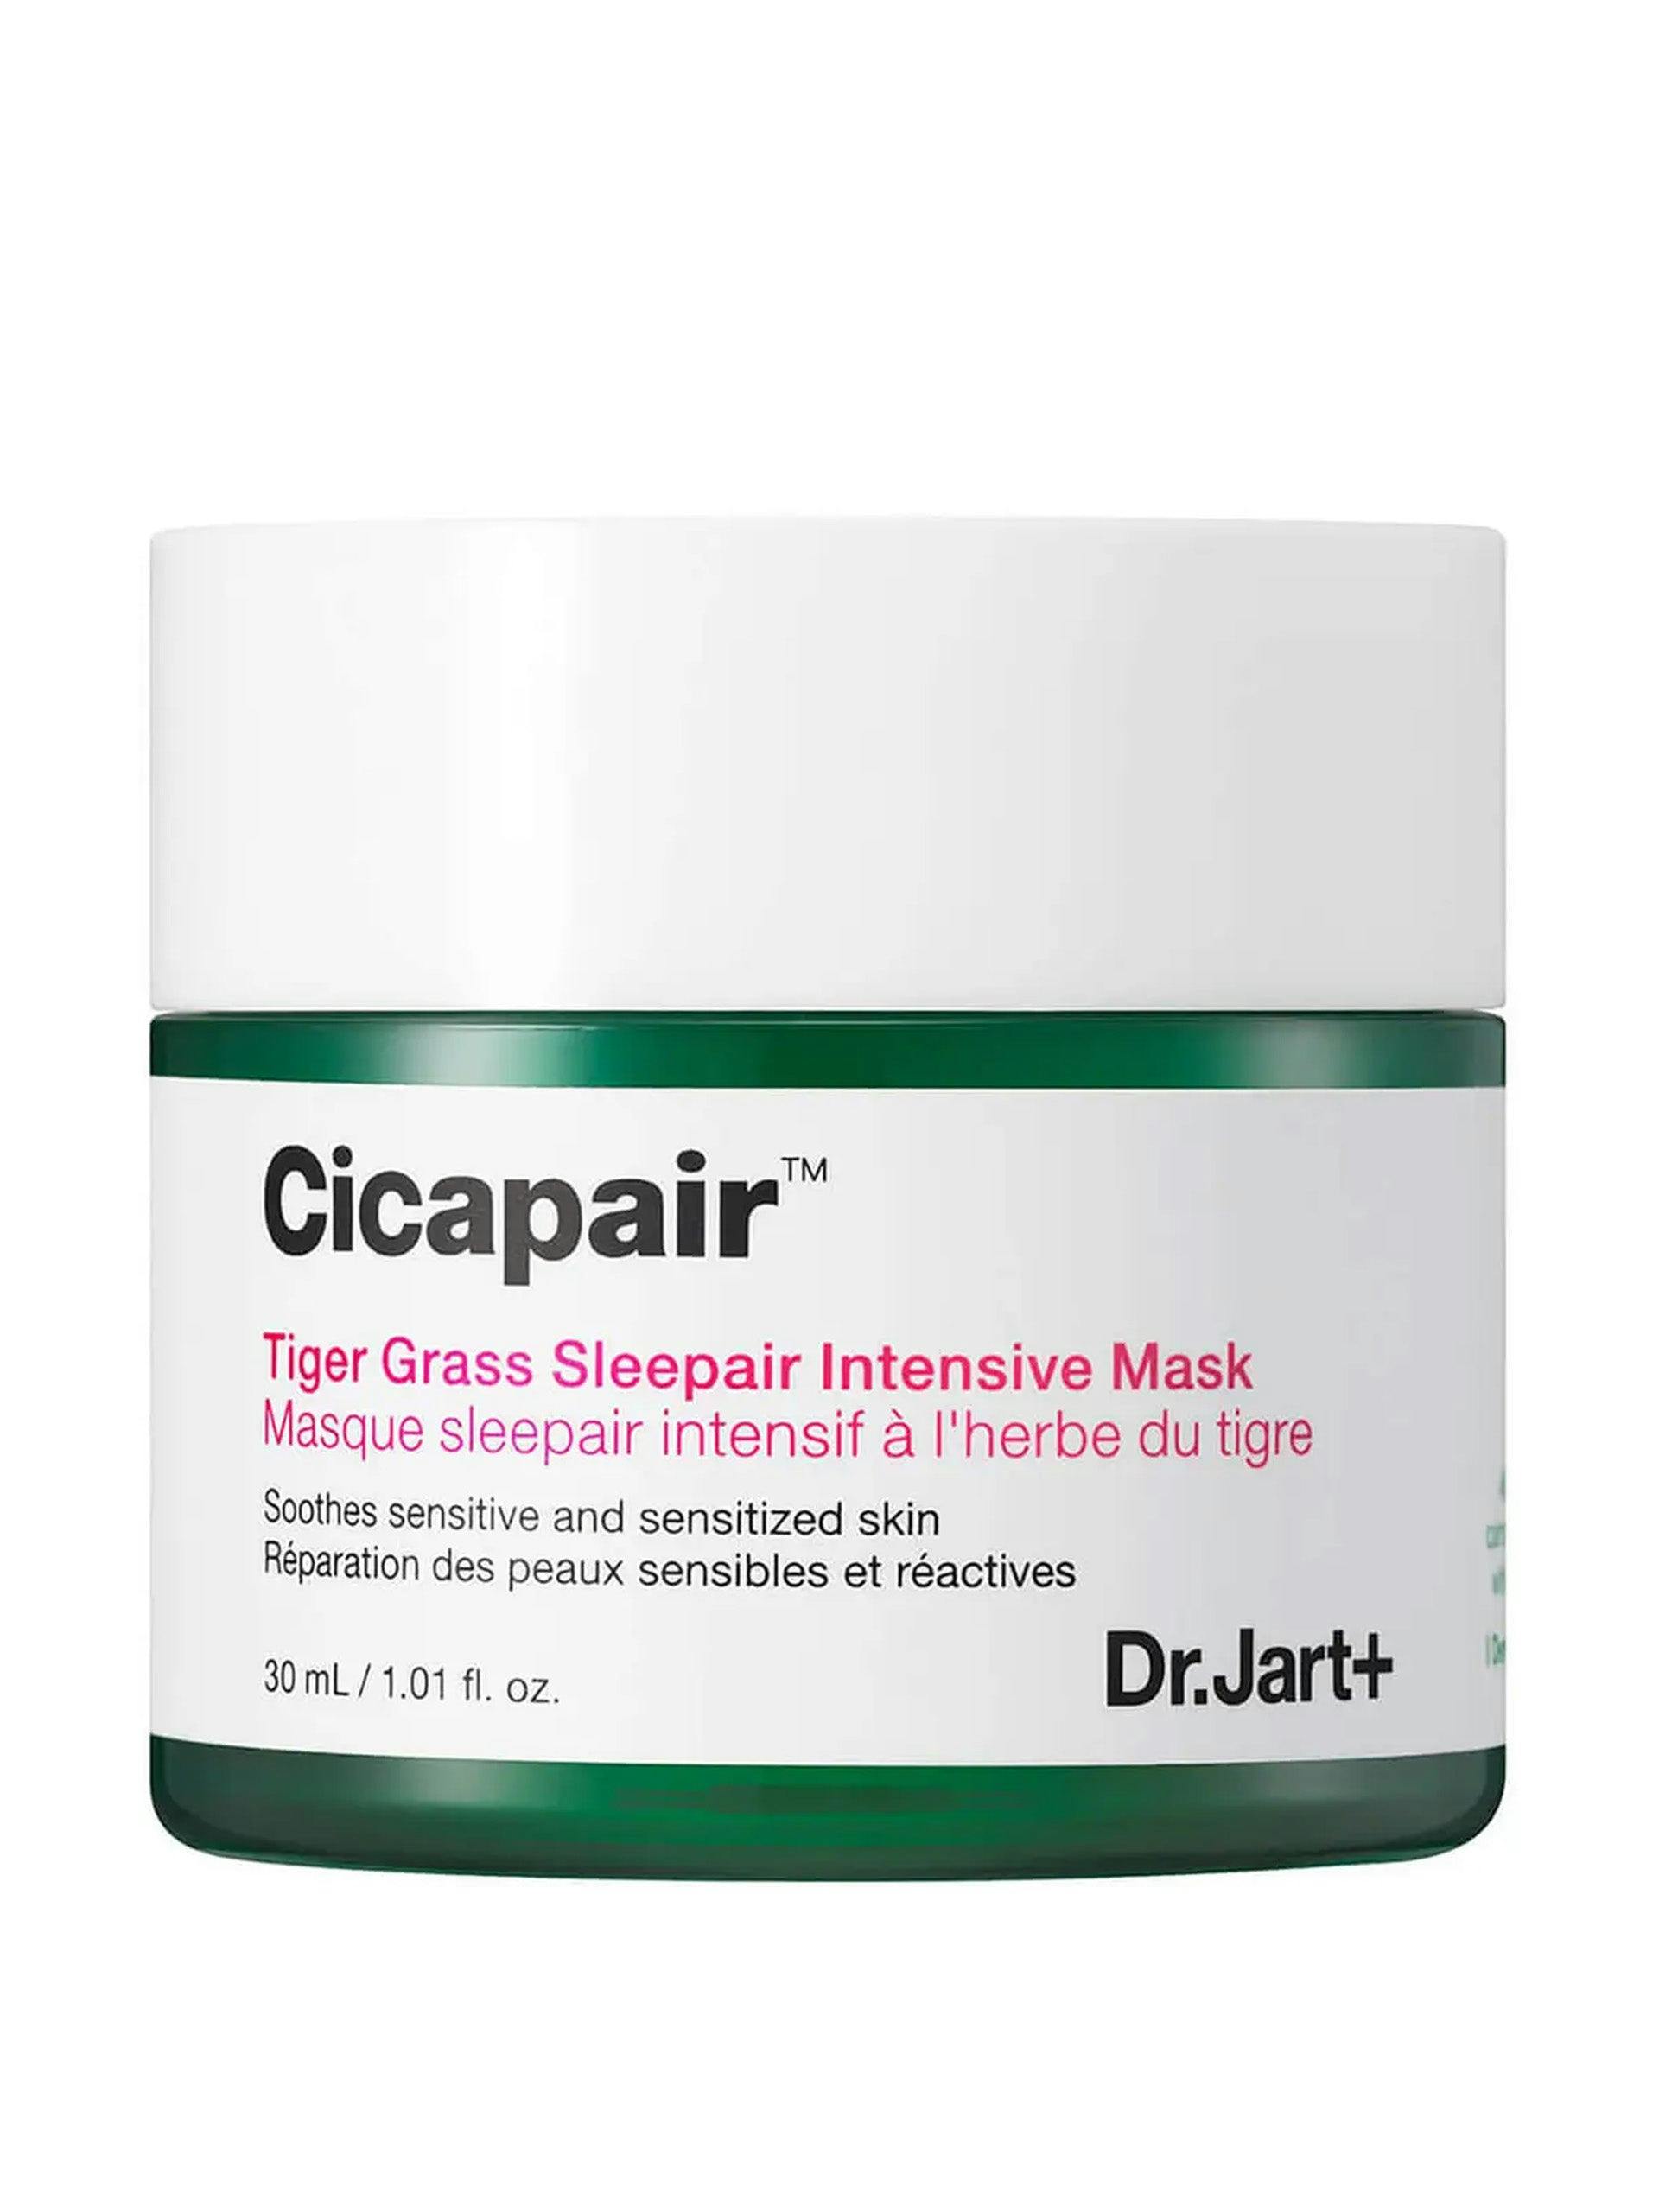 Cicapair tiger grass sleepair intensive mask